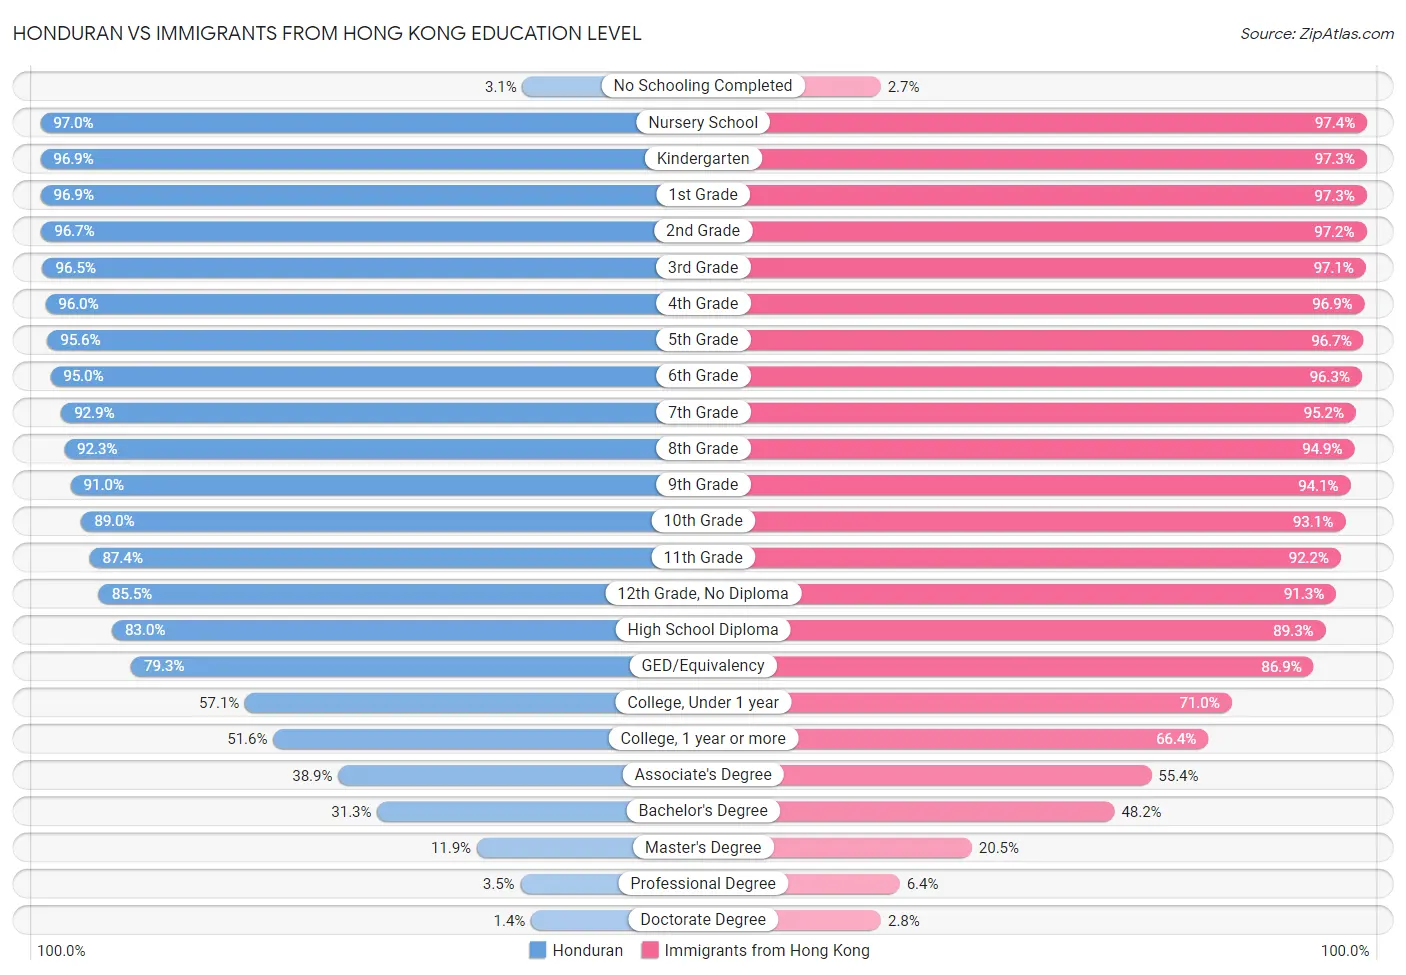 Honduran vs Immigrants from Hong Kong Education Level